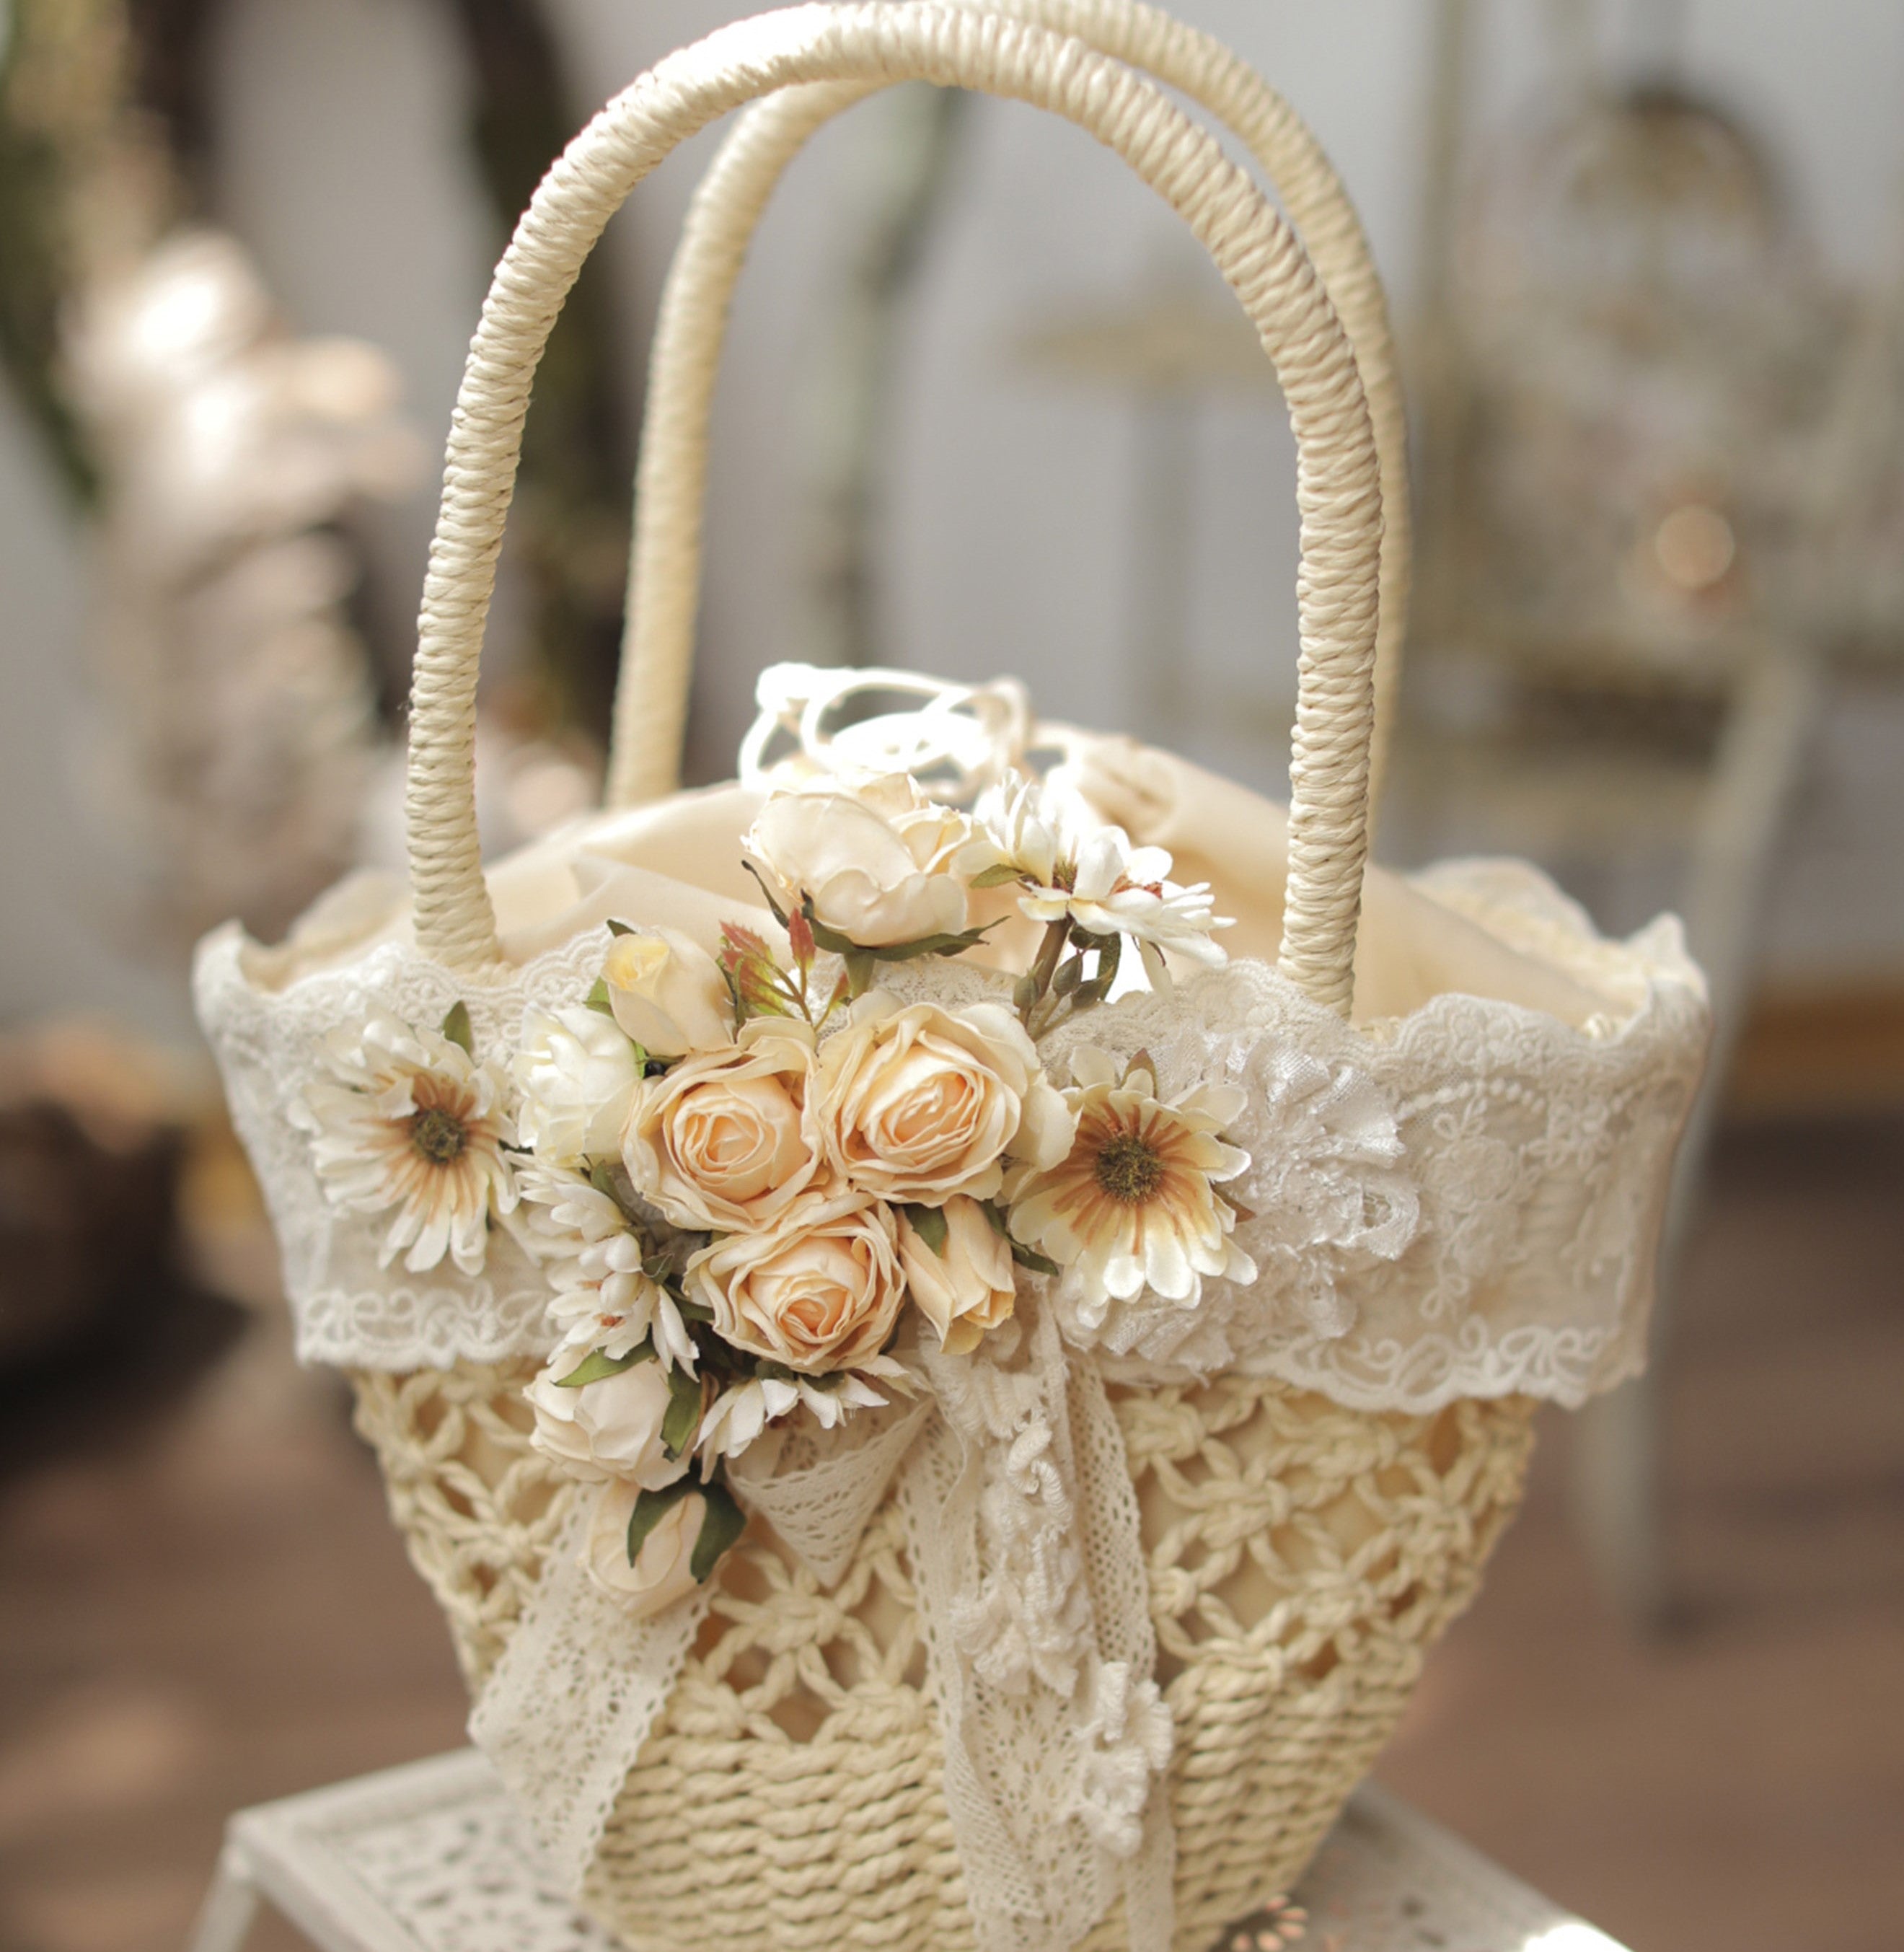 13 Charming Flower Petal Baskets Your Flower Girls Will Adore | HuffPost  Life